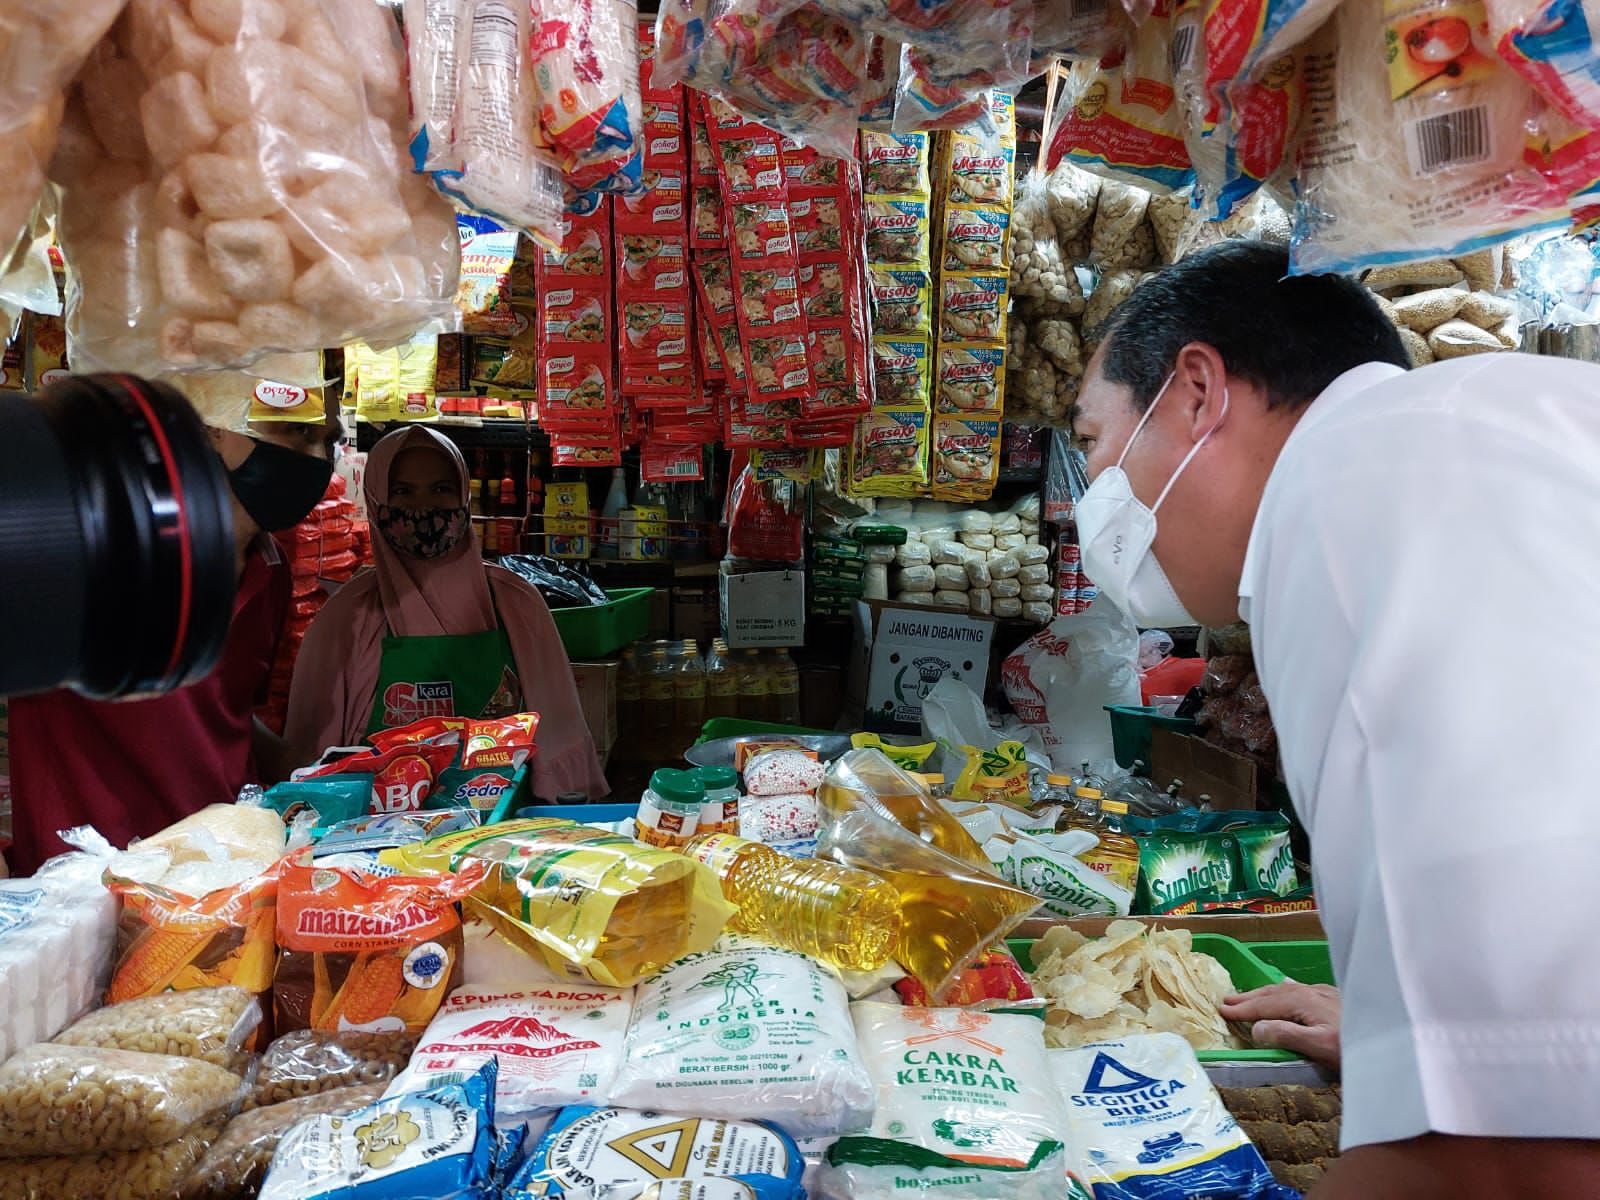 Ketika Mendag Lutfi Kunjungi Pasar, Tak Satu Pun Pedagang Jual Minyak Goreng Murah...